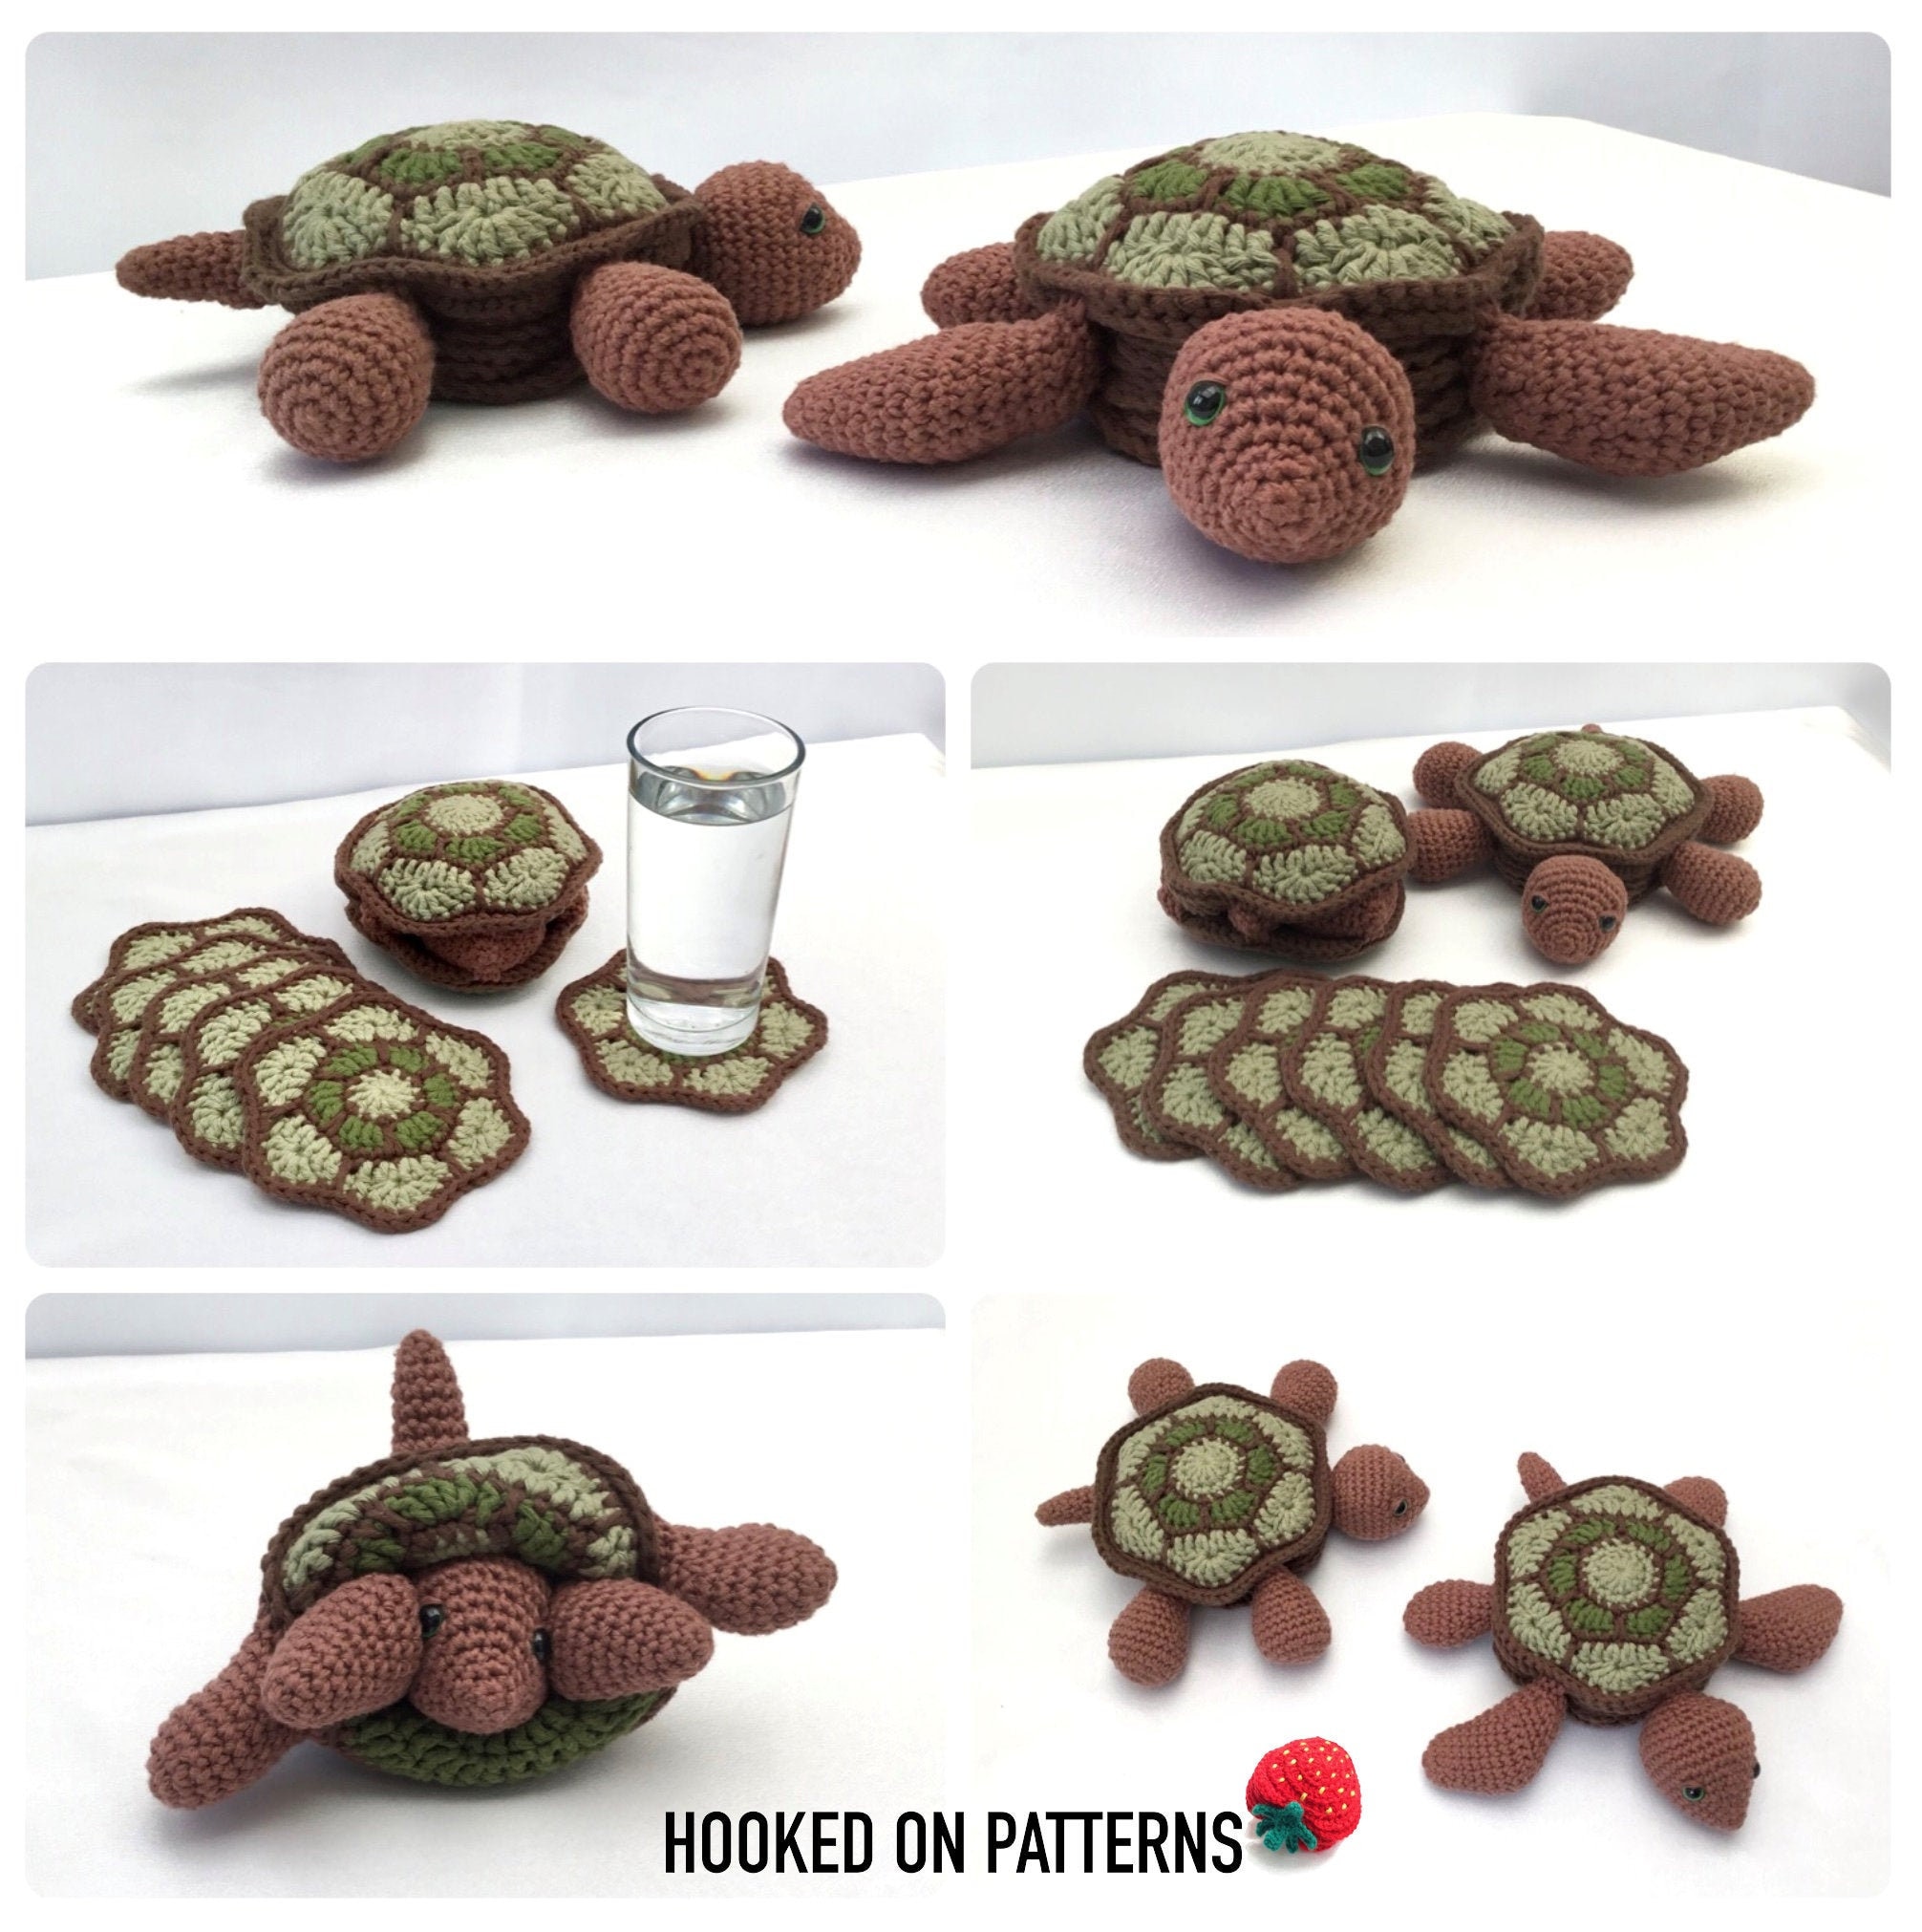 Crochet Turtle Coaster  Free Pattern + Video Tutorial – 365 Days of Dana